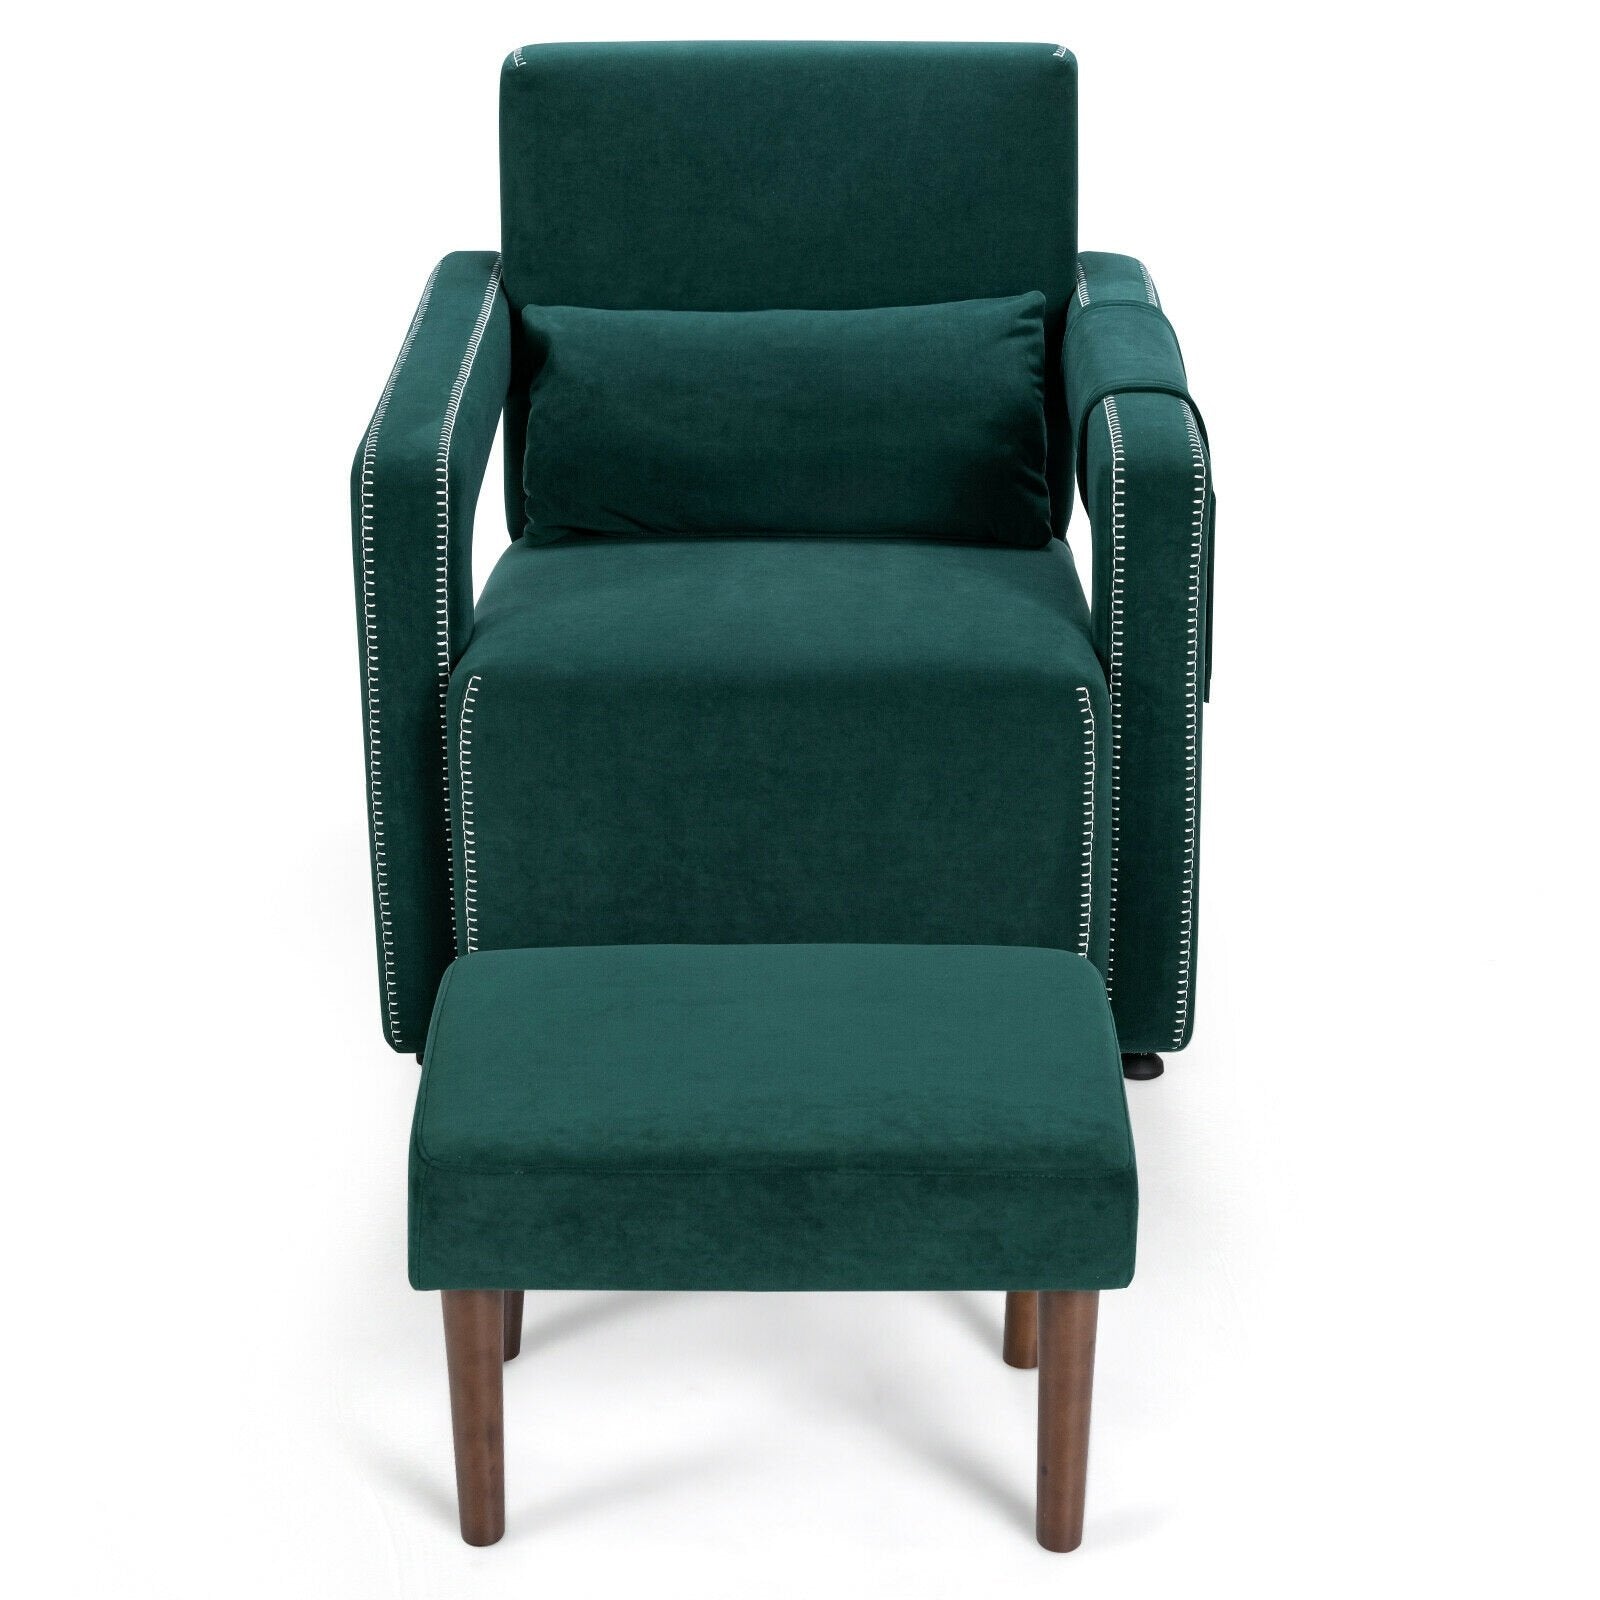 Modern Berber Fleece Single Sofa Chair with Ottoman and Waist Pillow, Green - Gallery Canada